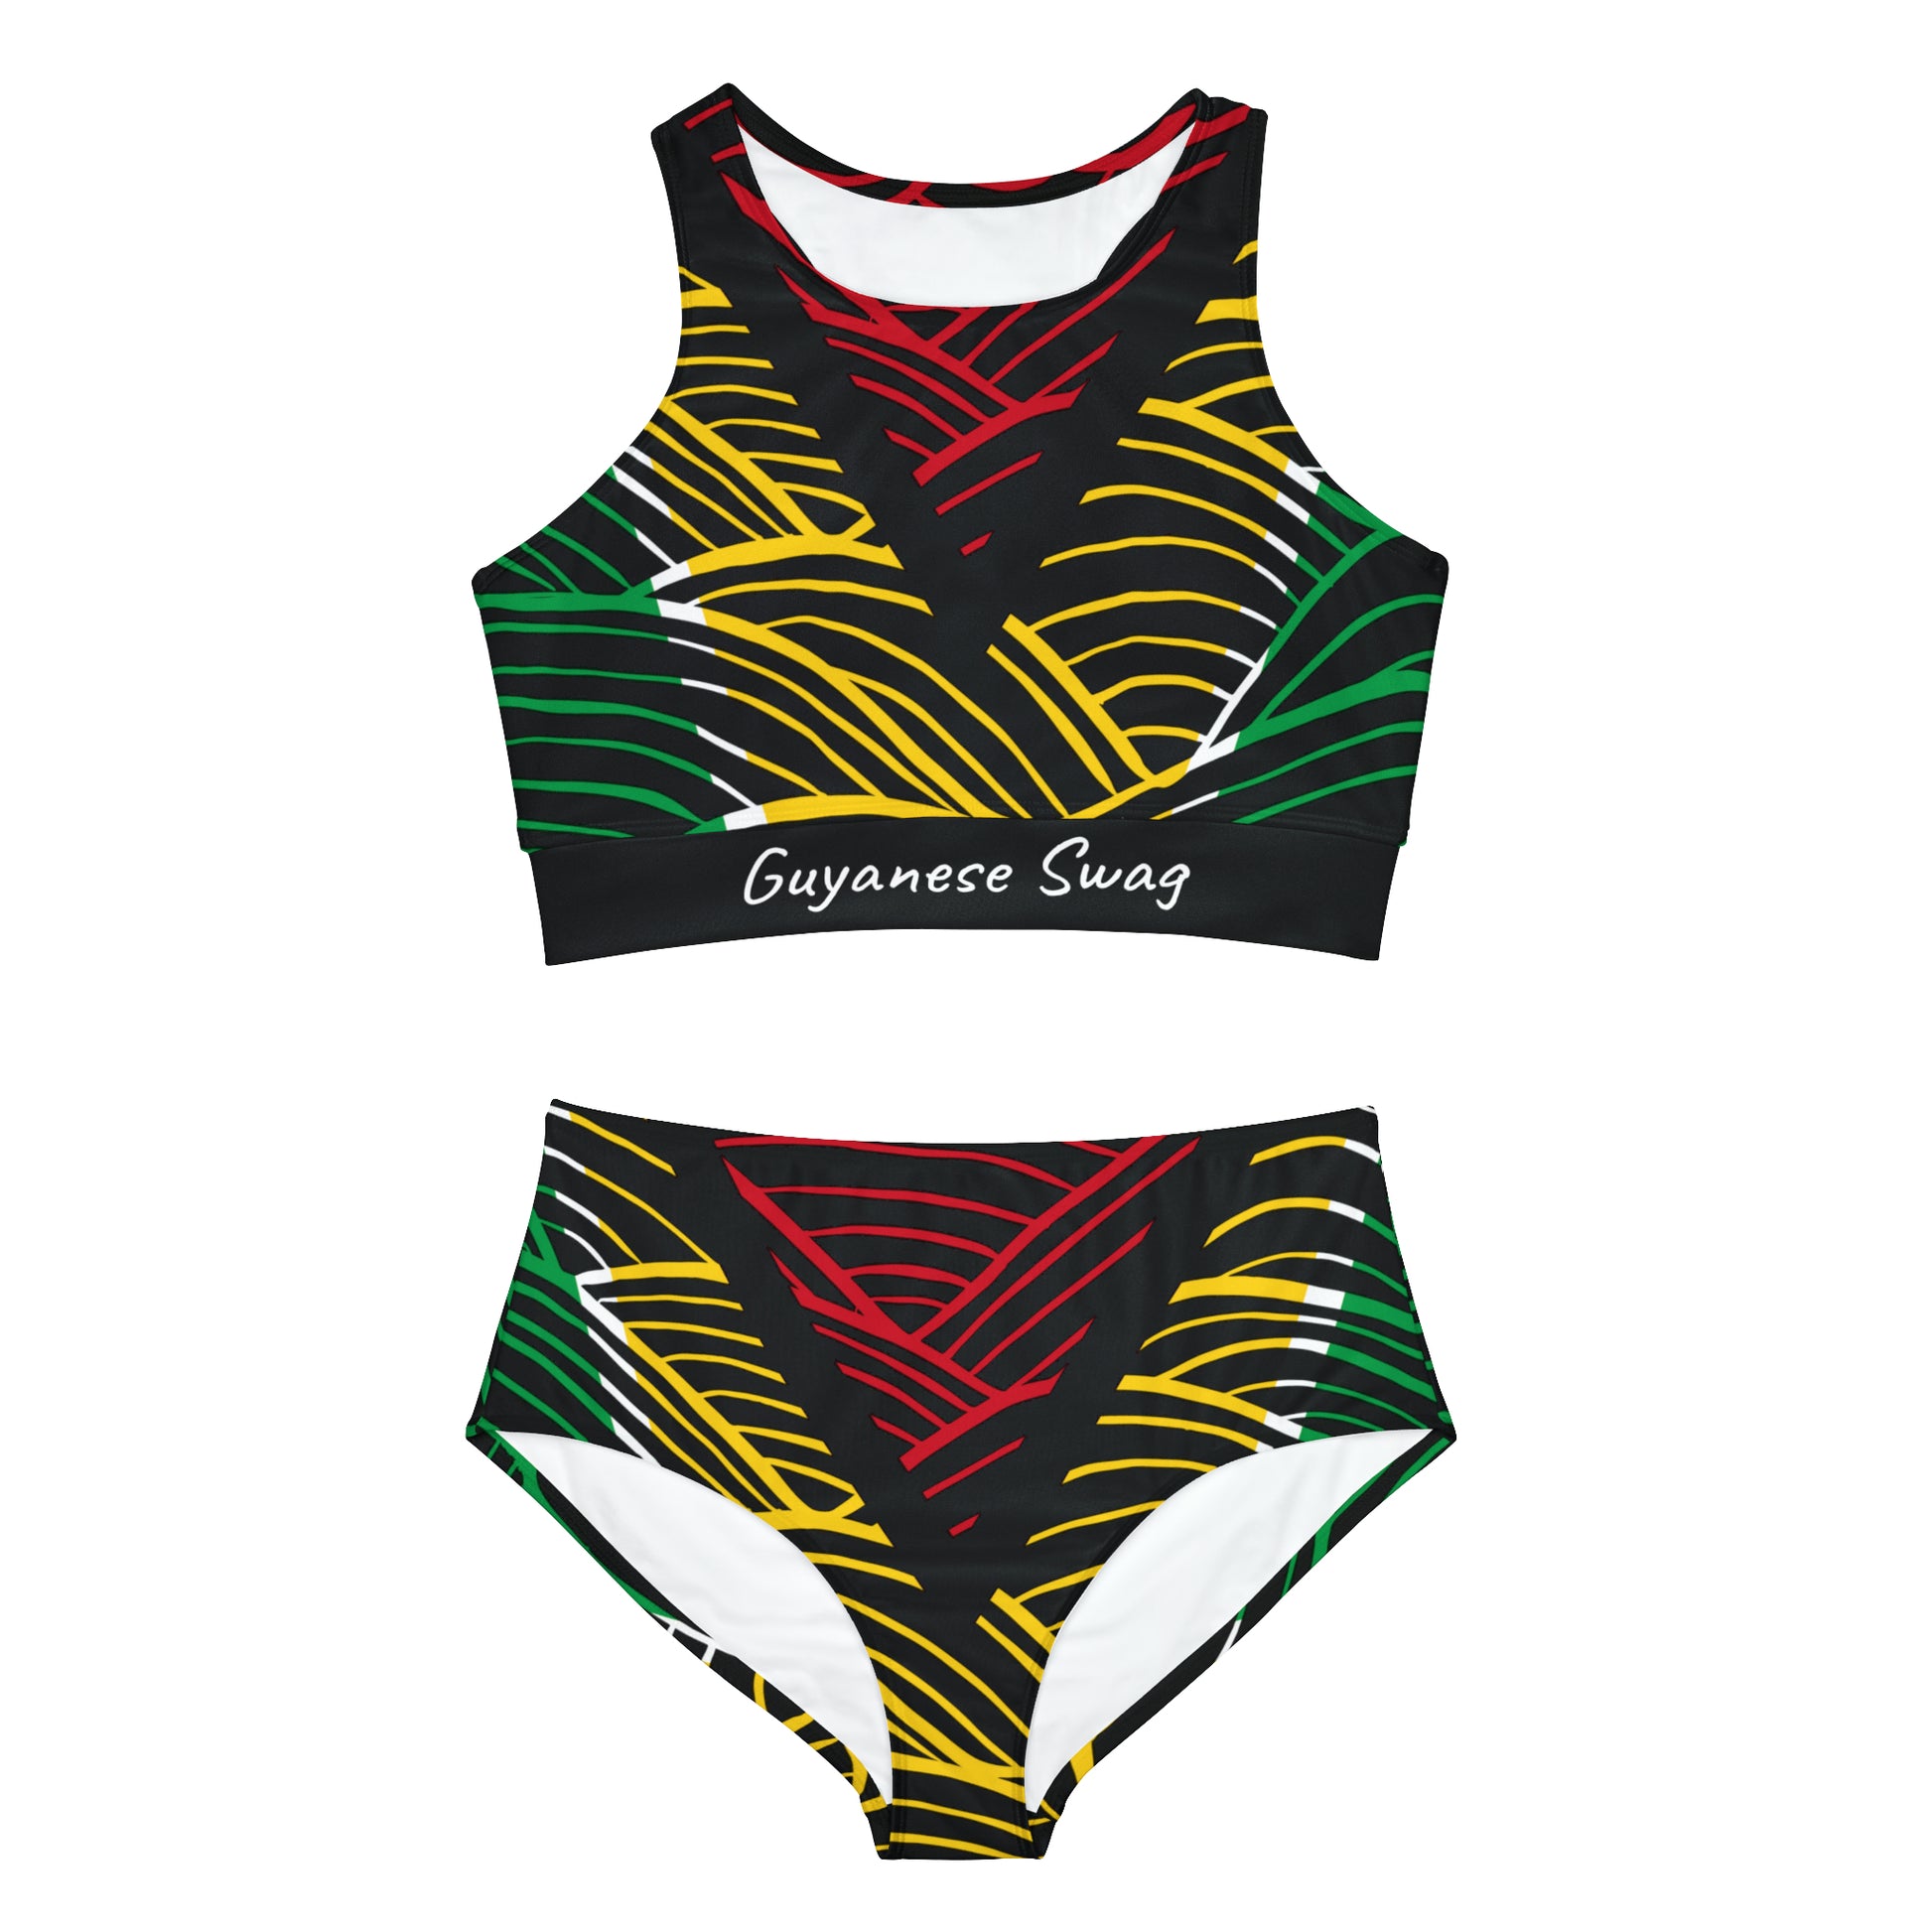 Sporty Guyana Flag Bikini Set.